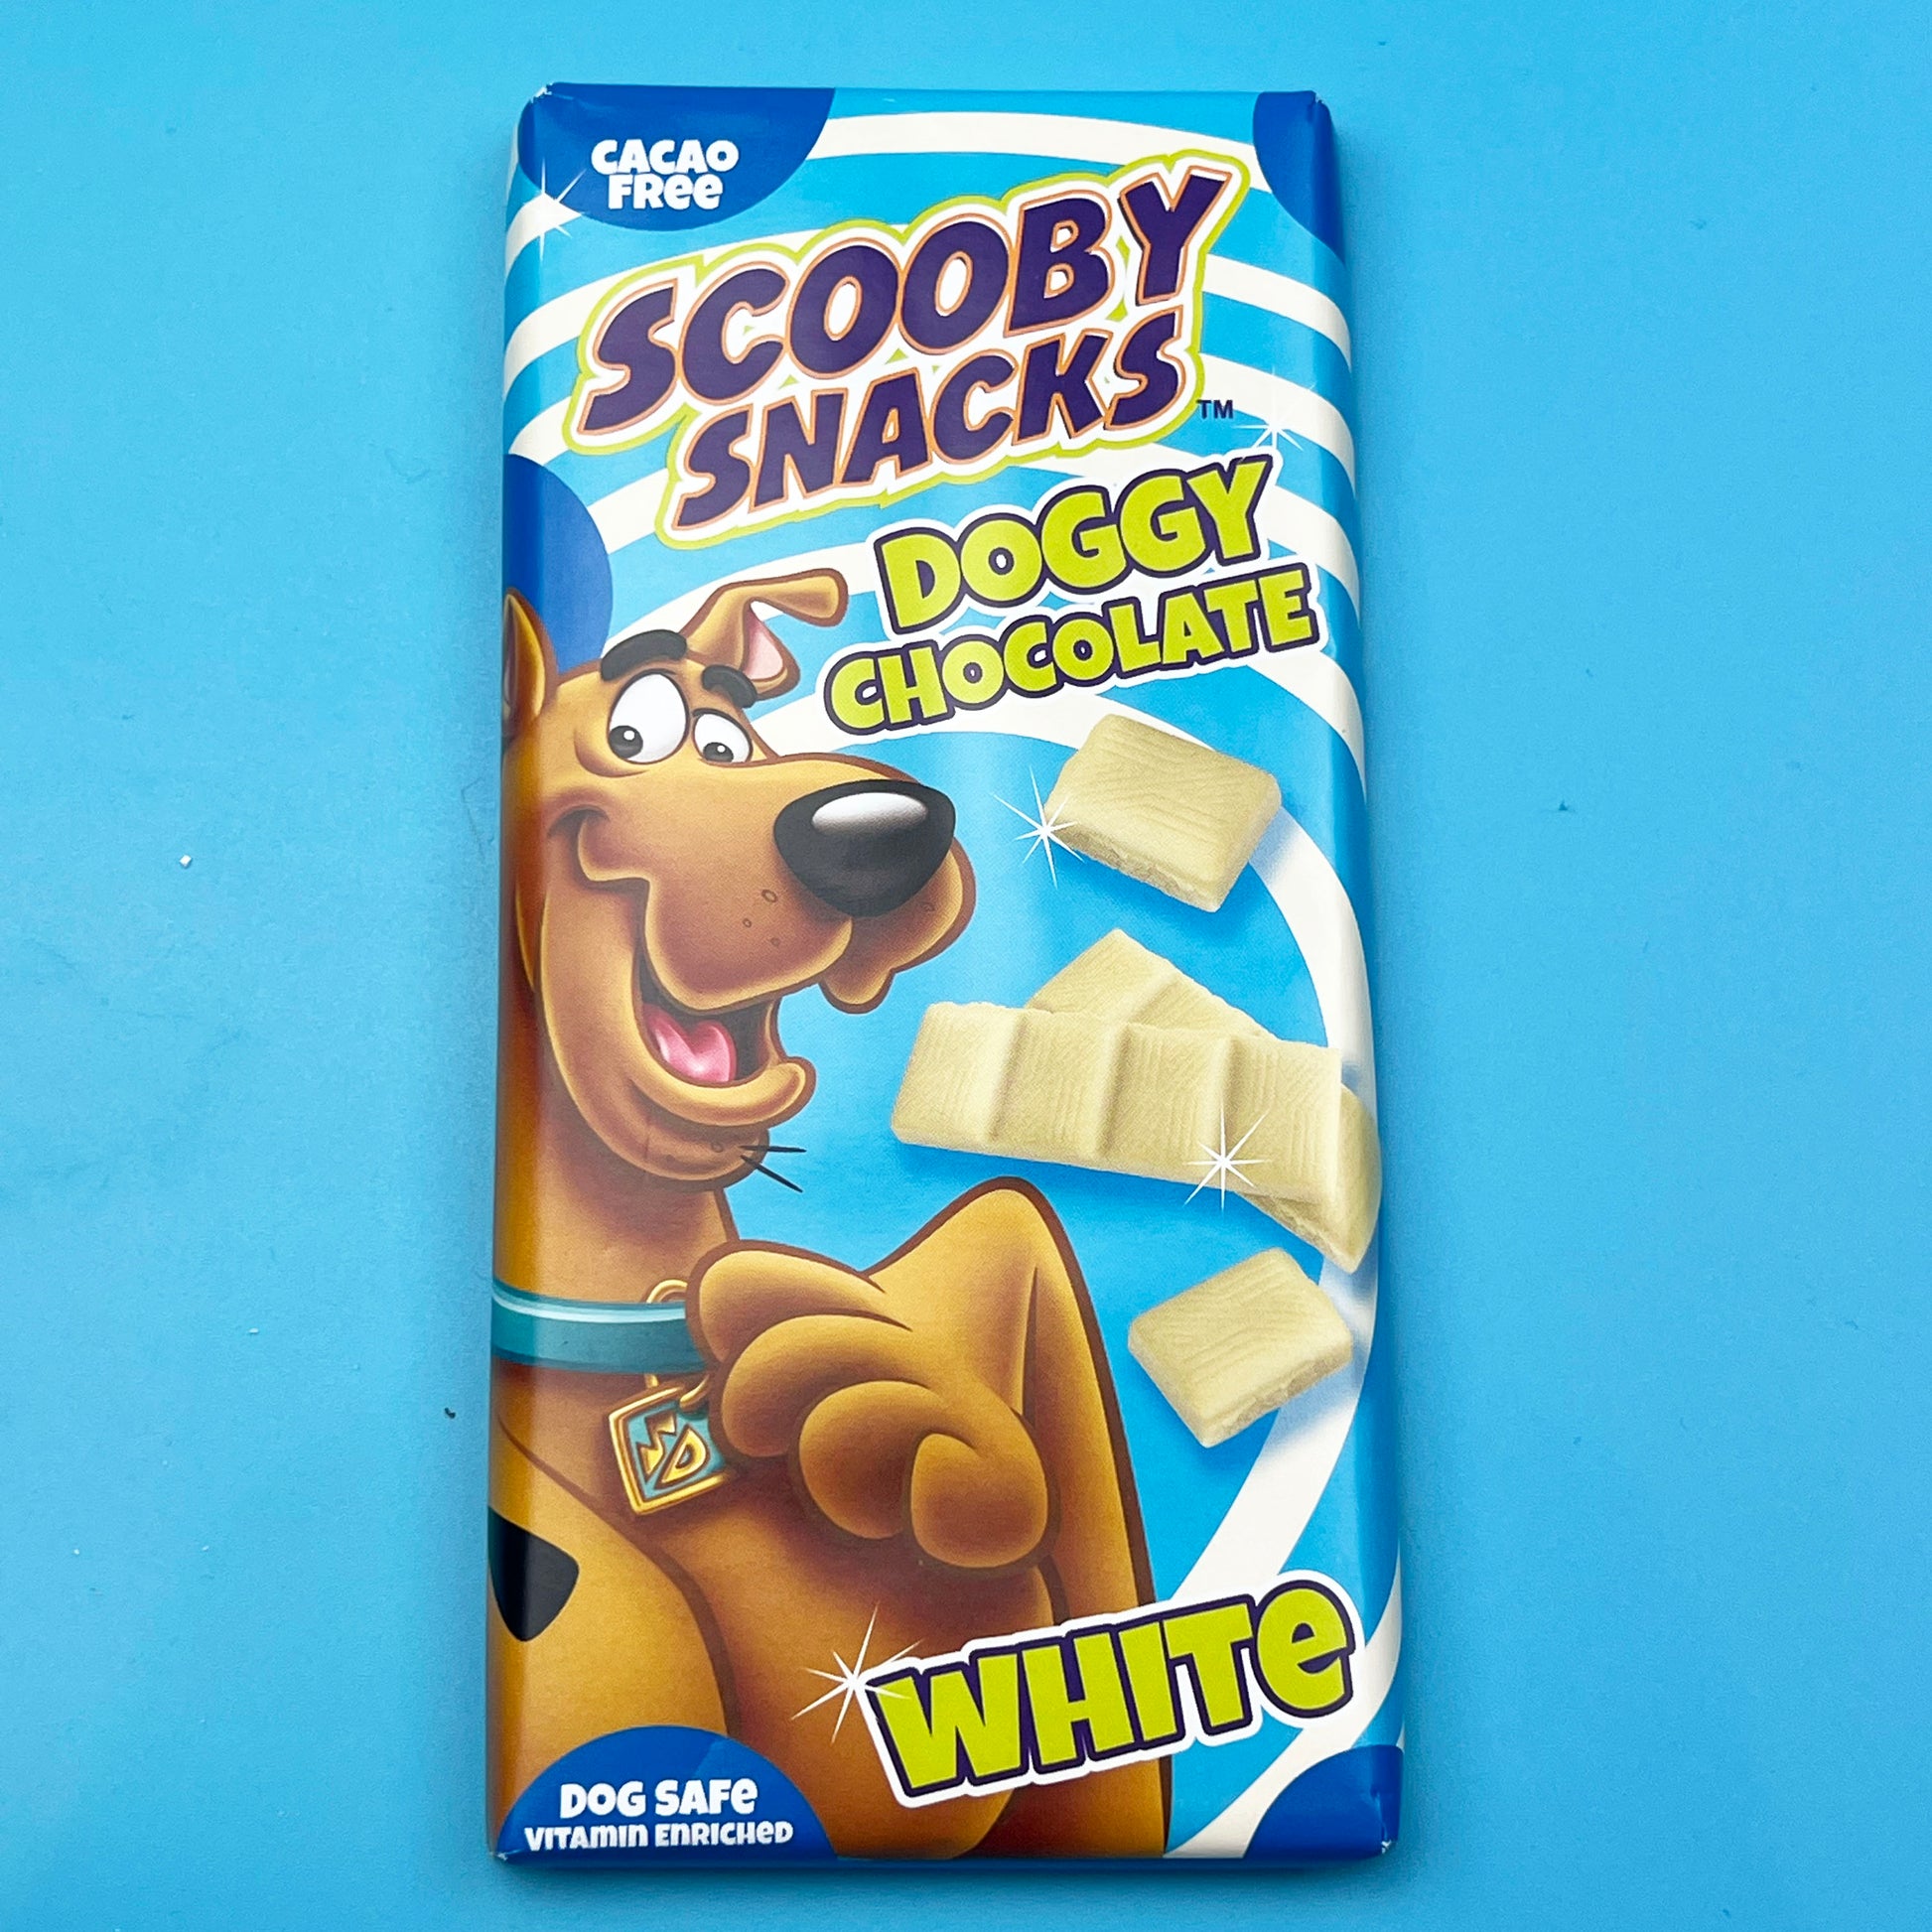 Scooby Snacks Doggy Chocolate White bearsupreme